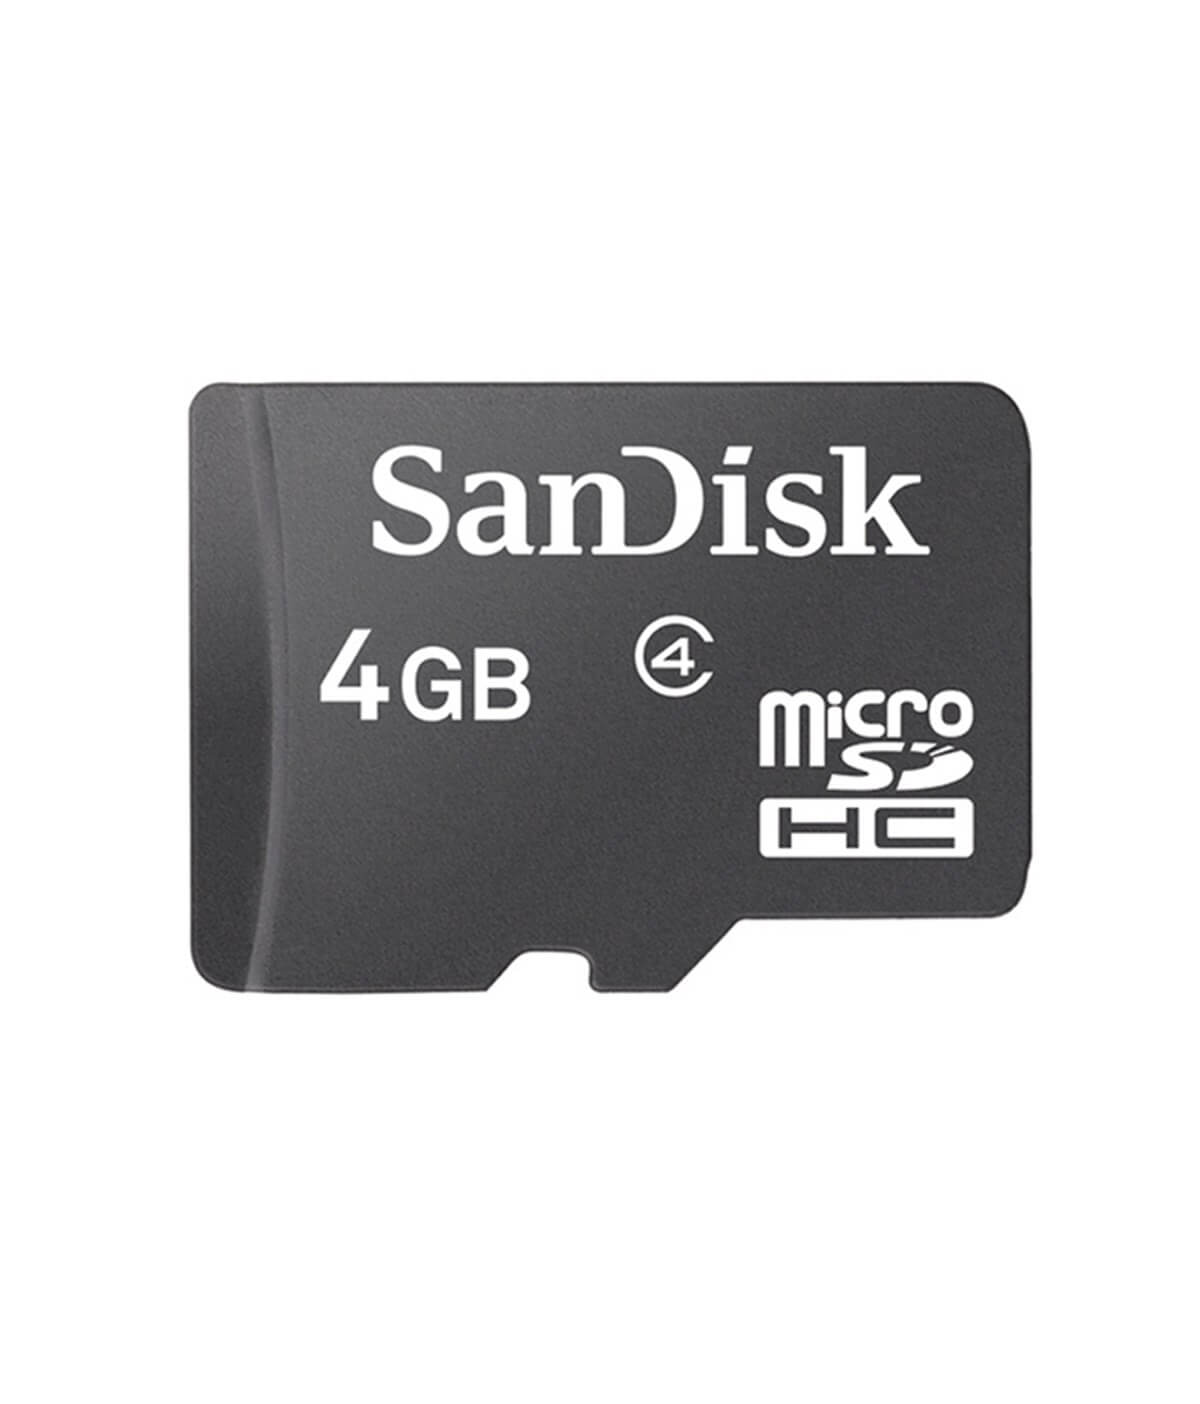 SanDisk 4 GB Micro SD HC Hafıza Kartı - mobilecarsi